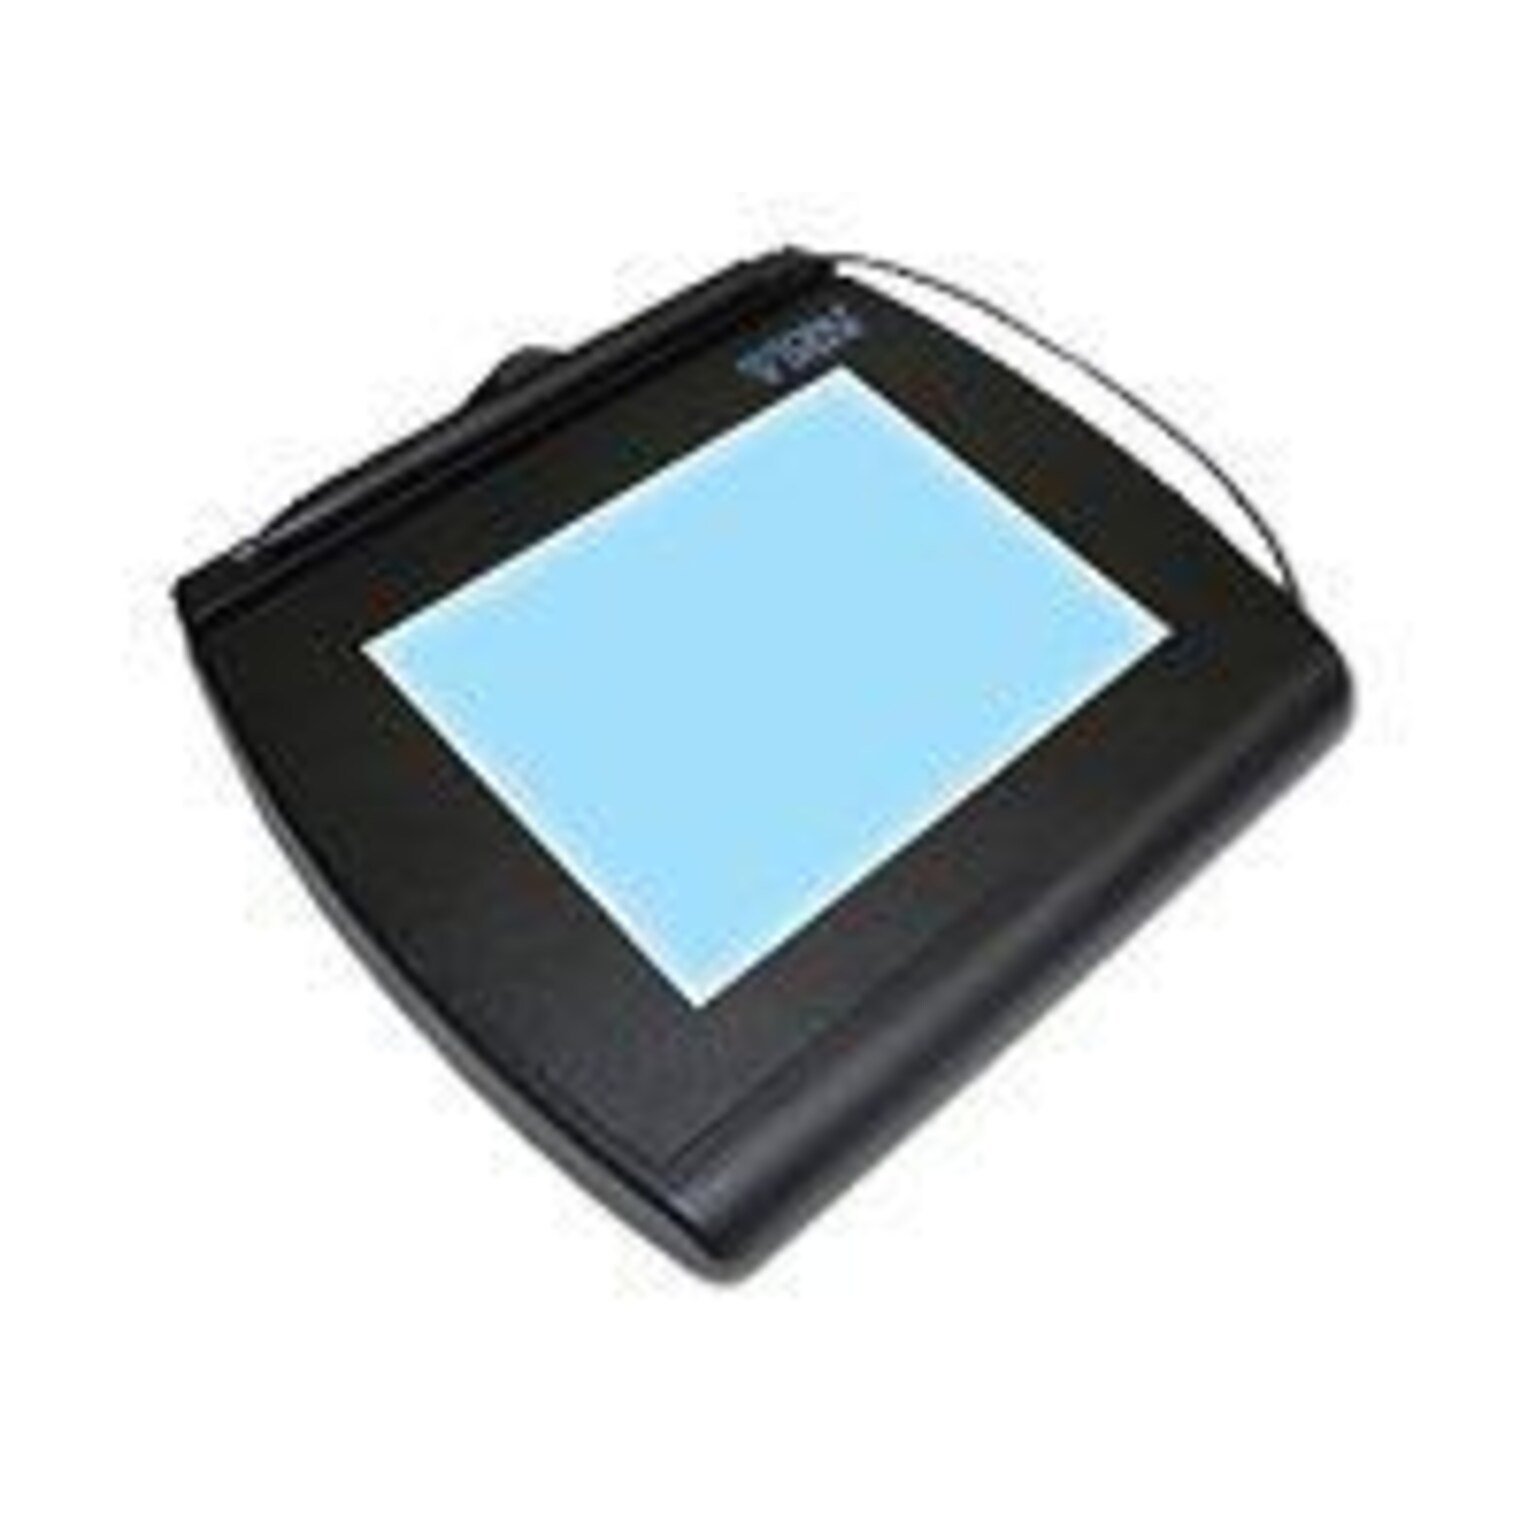 Topaz® SignatureGem LCD 4x5 USB Backlit Signature Pad With Electronic Pen; Black, 4.6 x 0.13